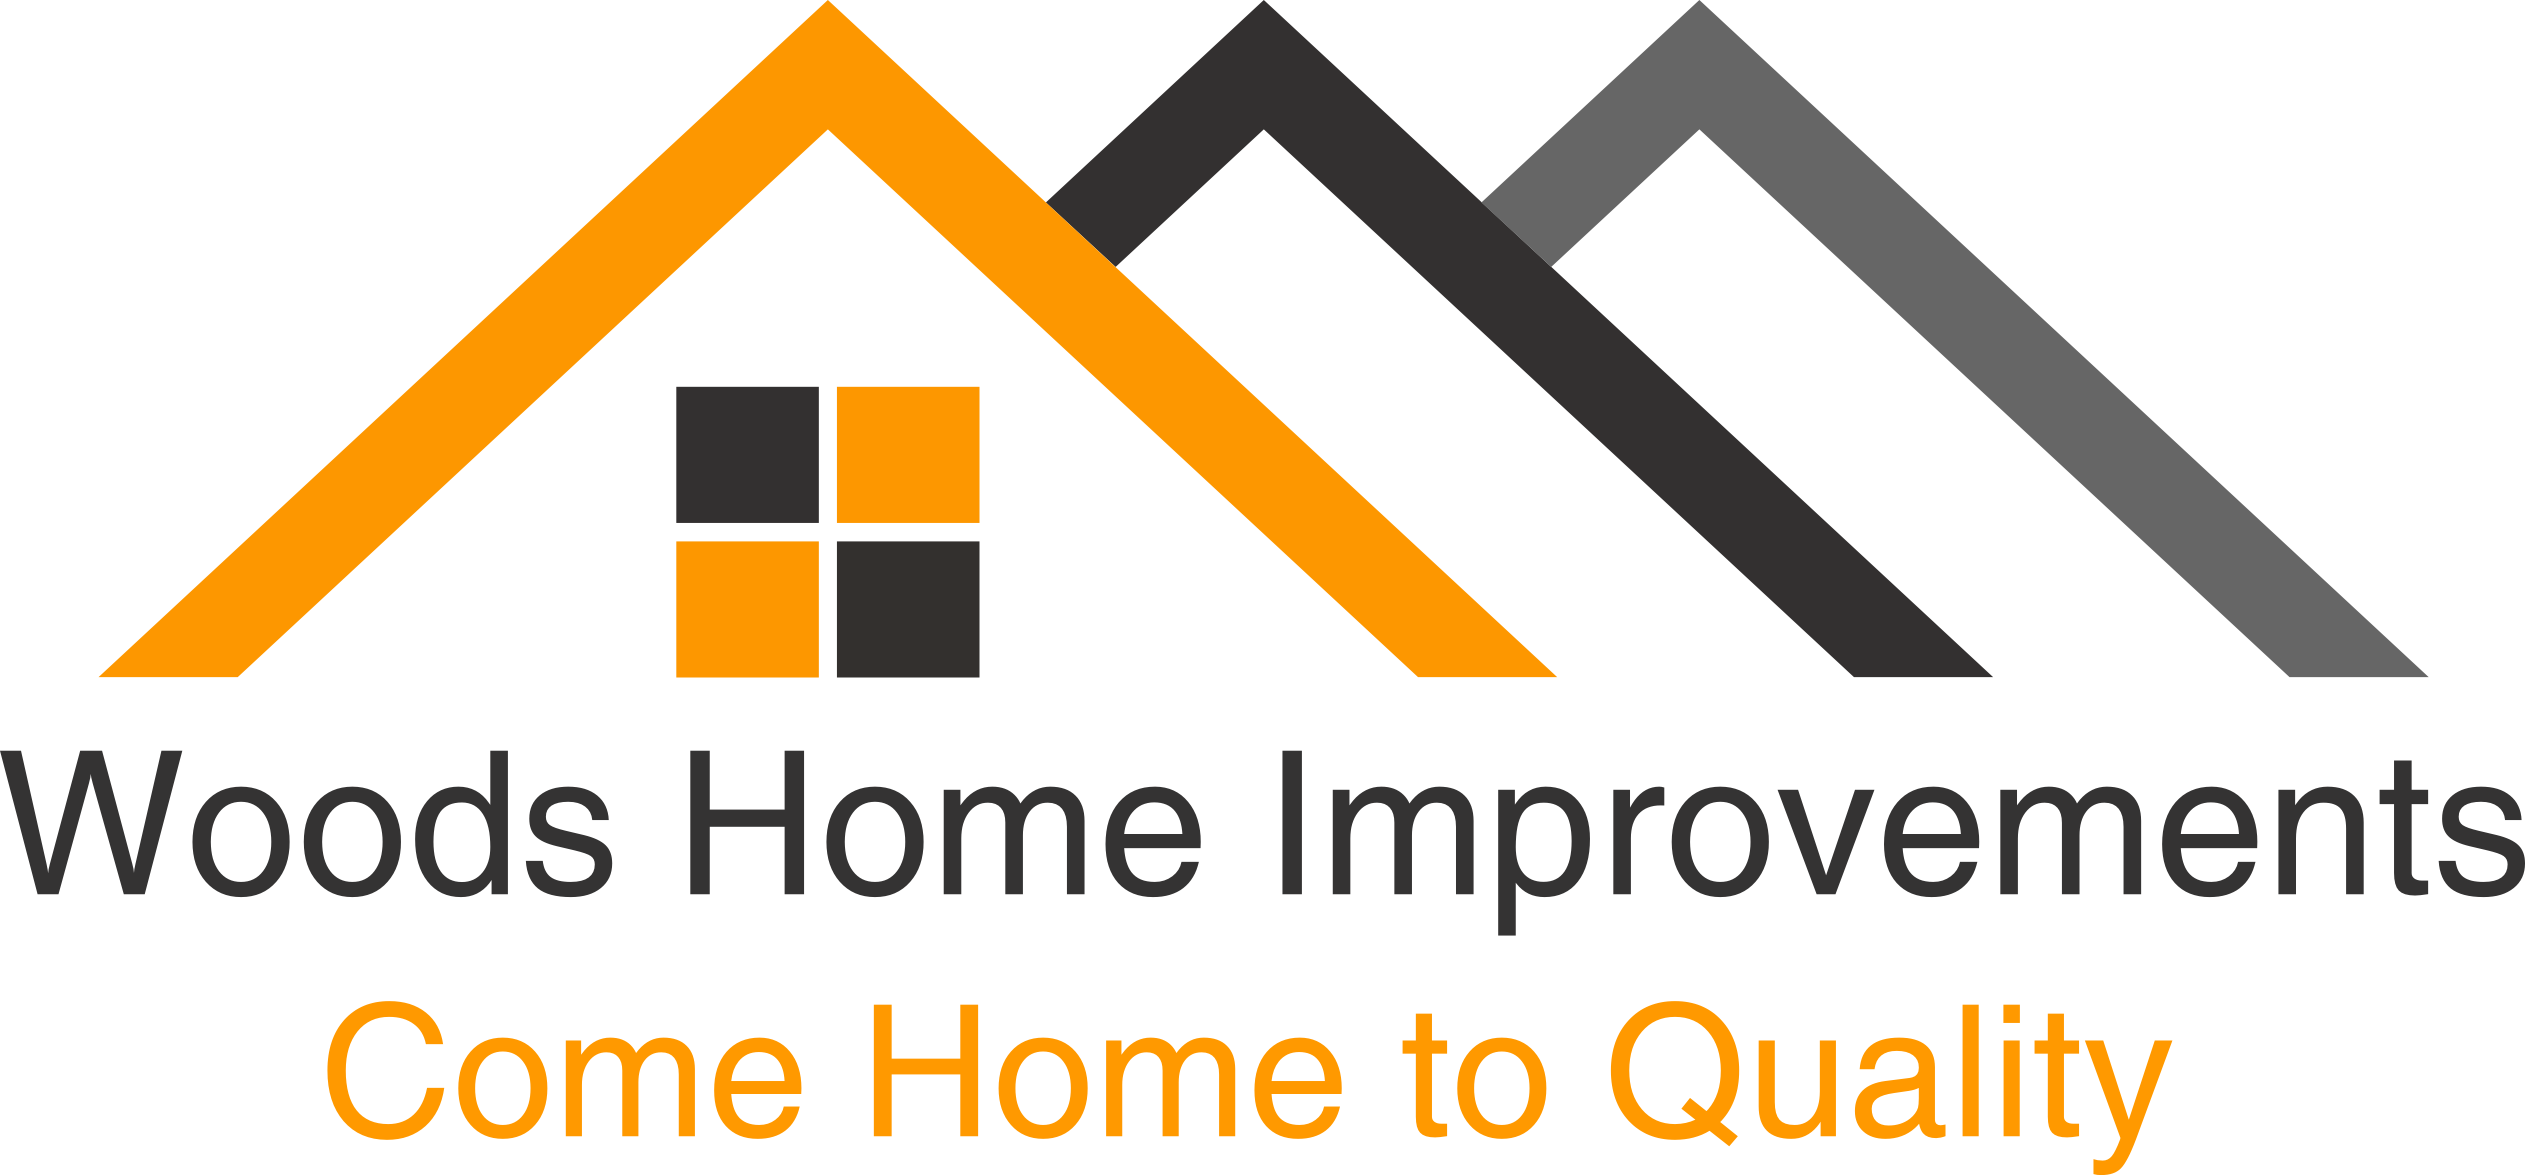 handyman clipart home improvement